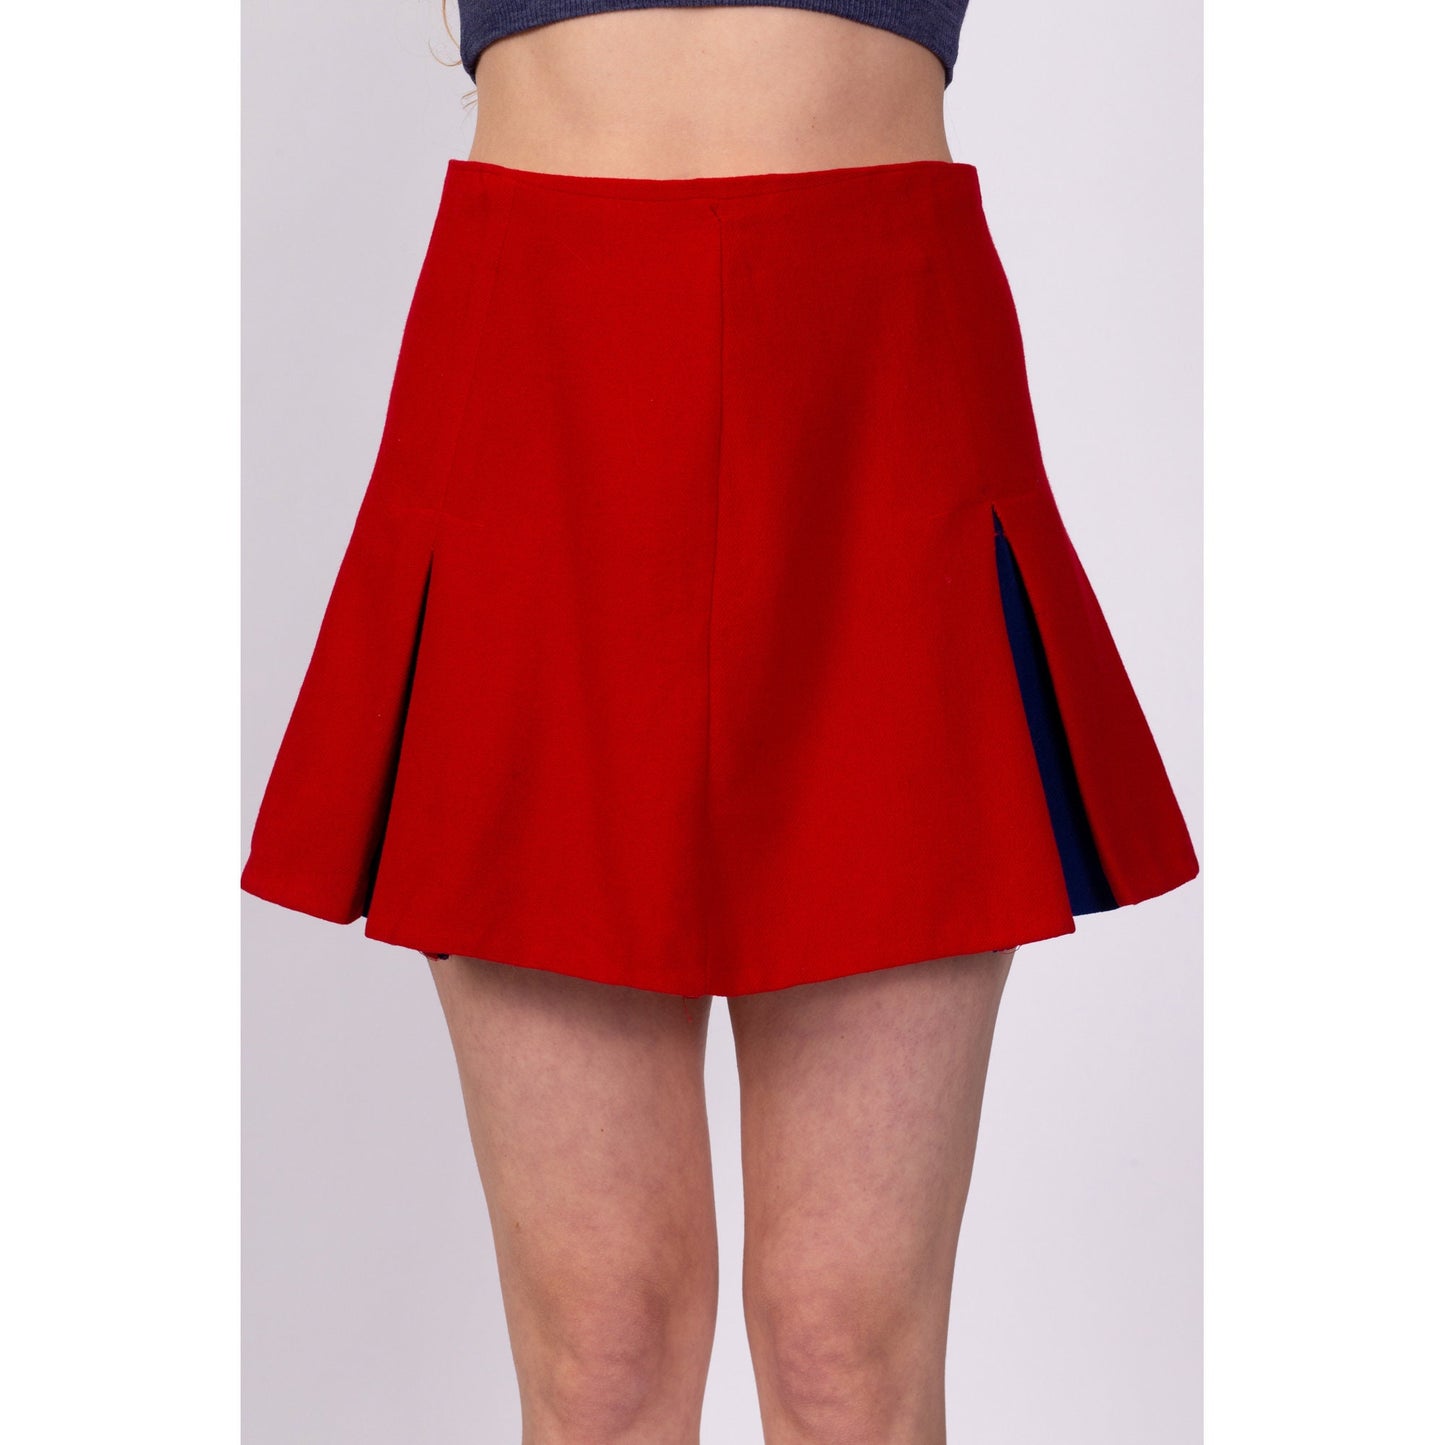 70s Red Cheerleader Mini Skirt - Medium, 28" 